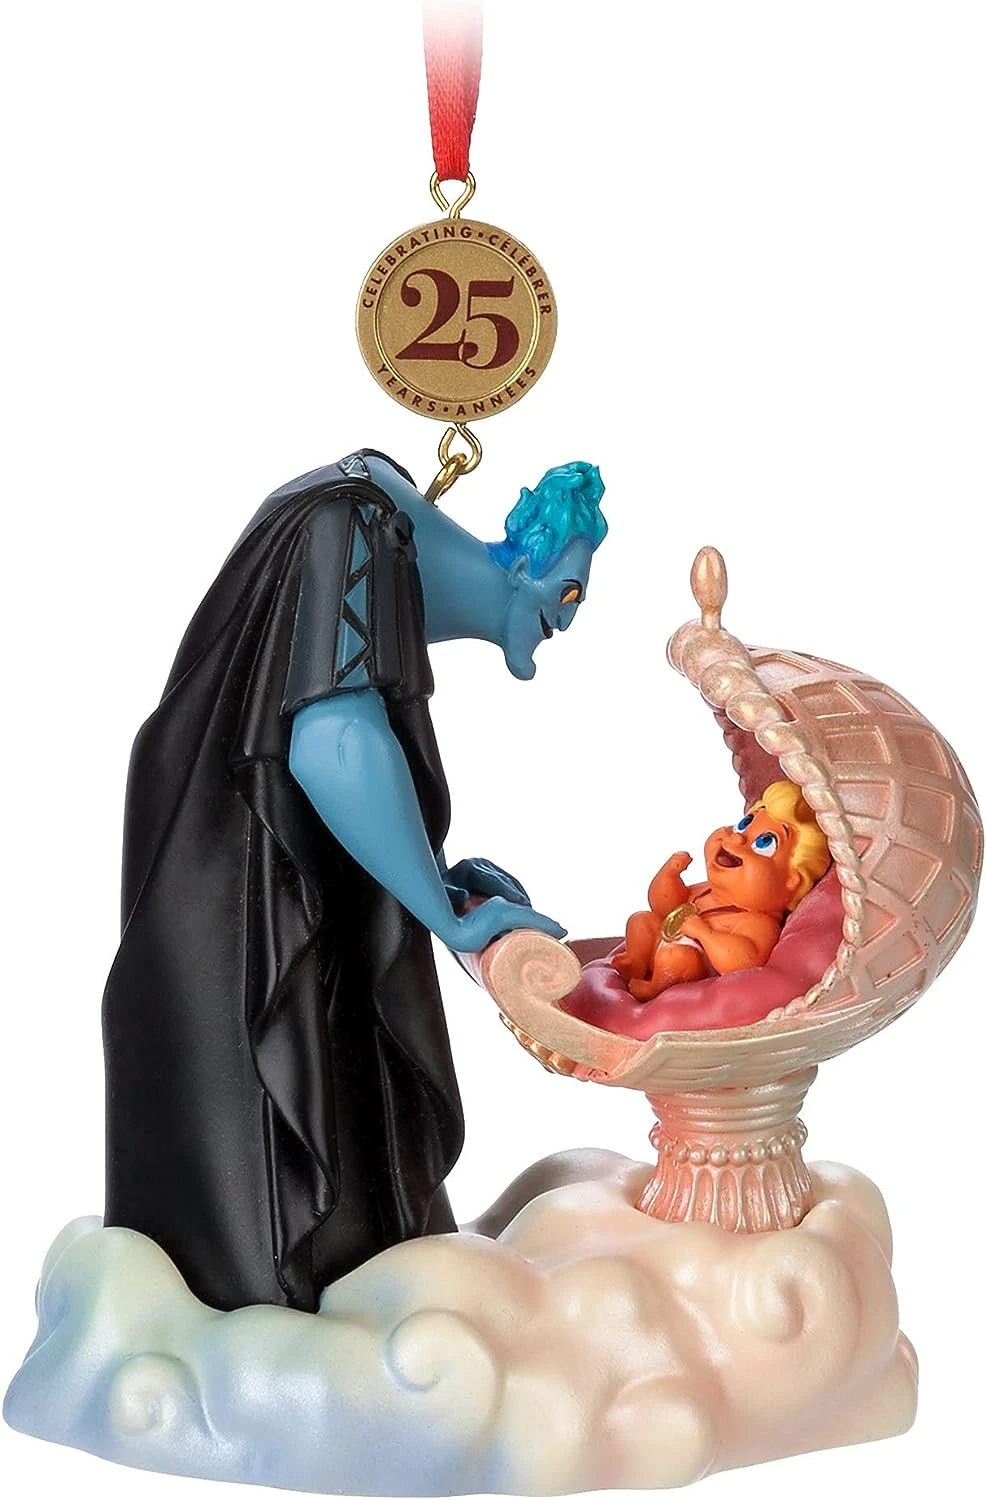 item Ornament - Hades - 25th Anniversary - Hercules - Limited Release 71uwacghtnl-ac-sl1500-jpg